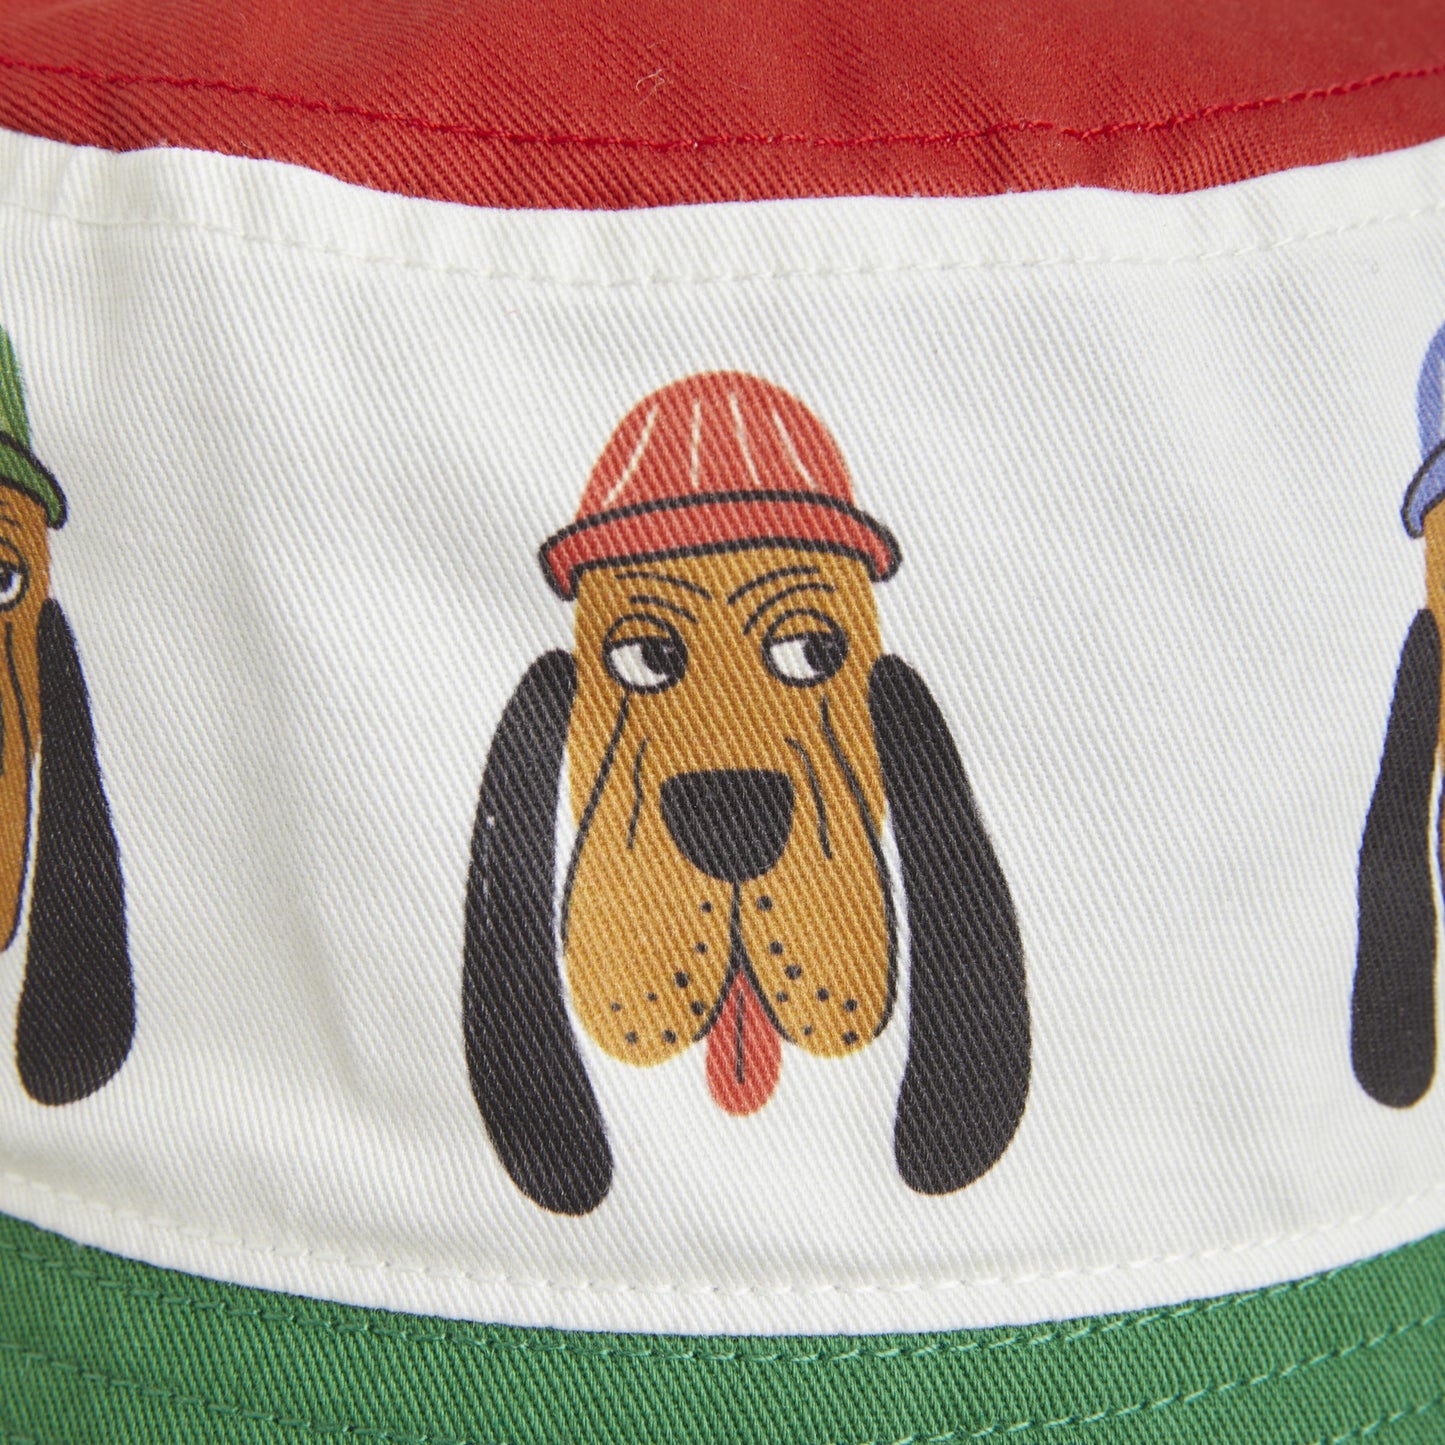 MINI RODINI Bloodhound Bucket Hat ALWAYS SHOW